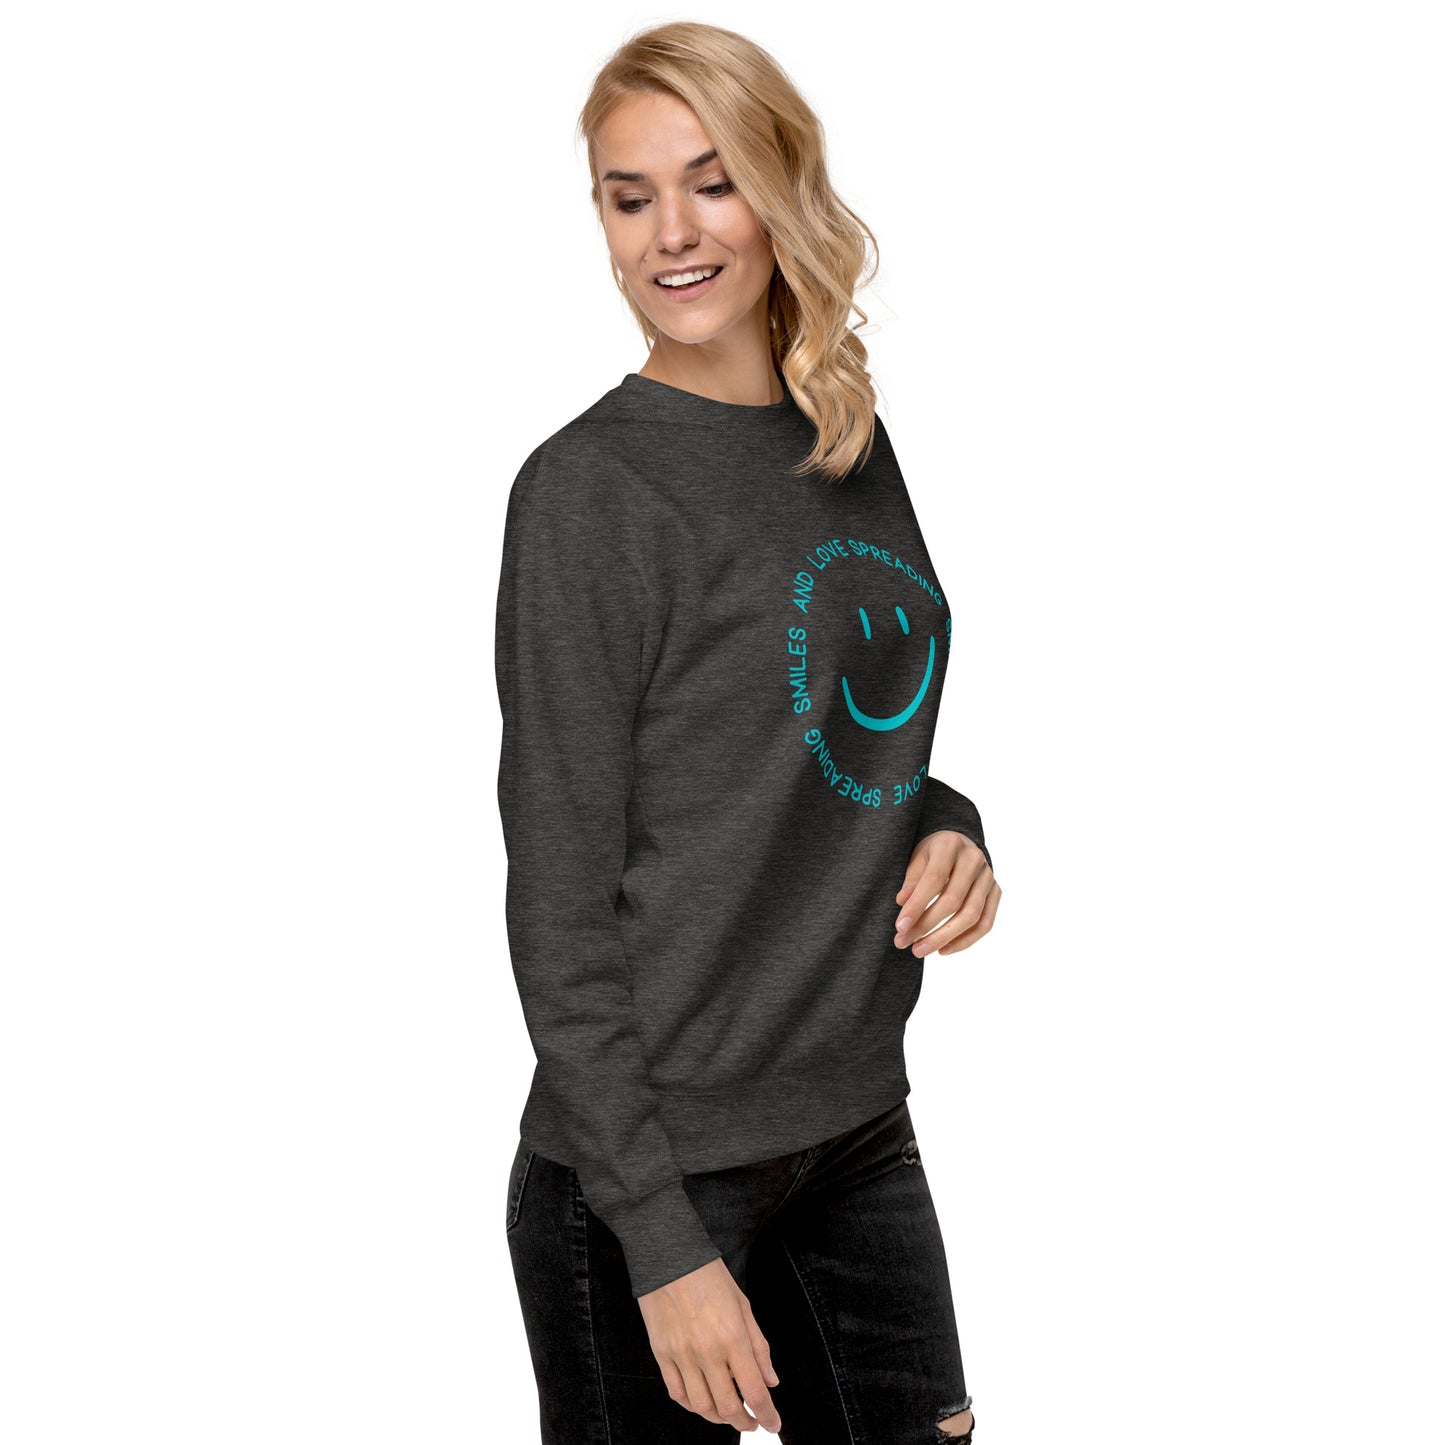 Unisex Premium Sweatshirt - SPREADING SMILES AND LOVE